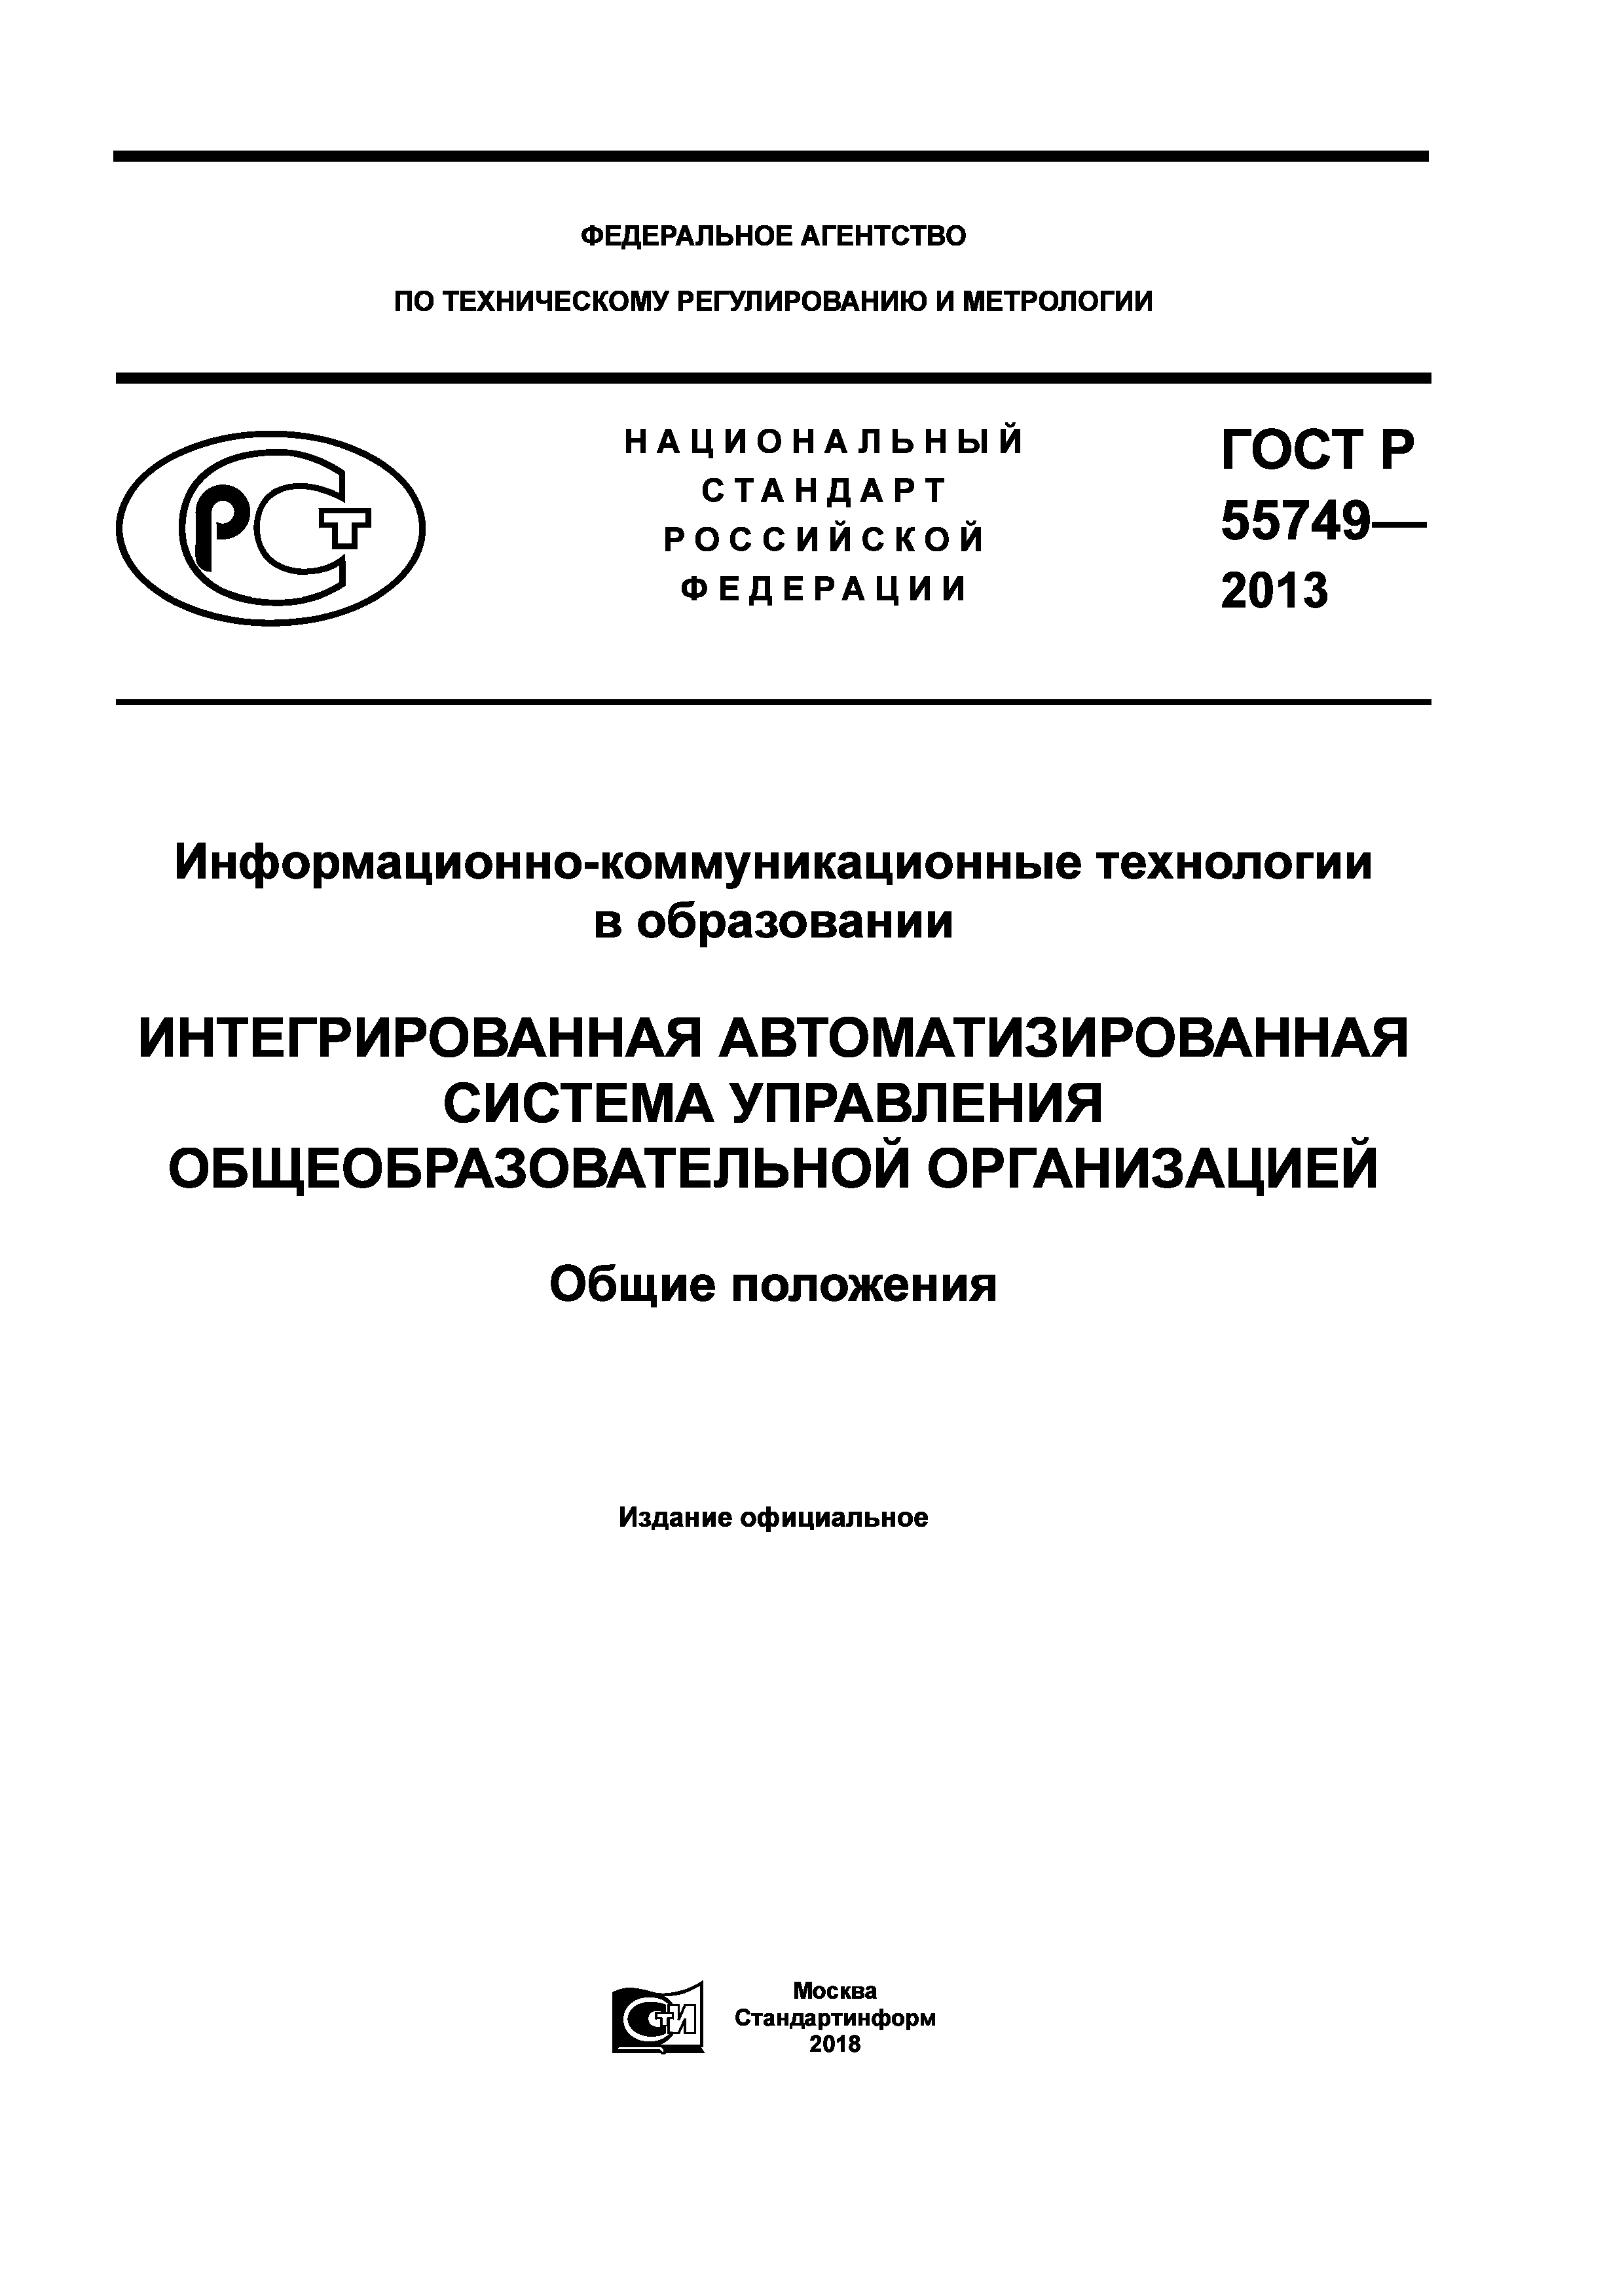 ГОСТ Р 55749-2013